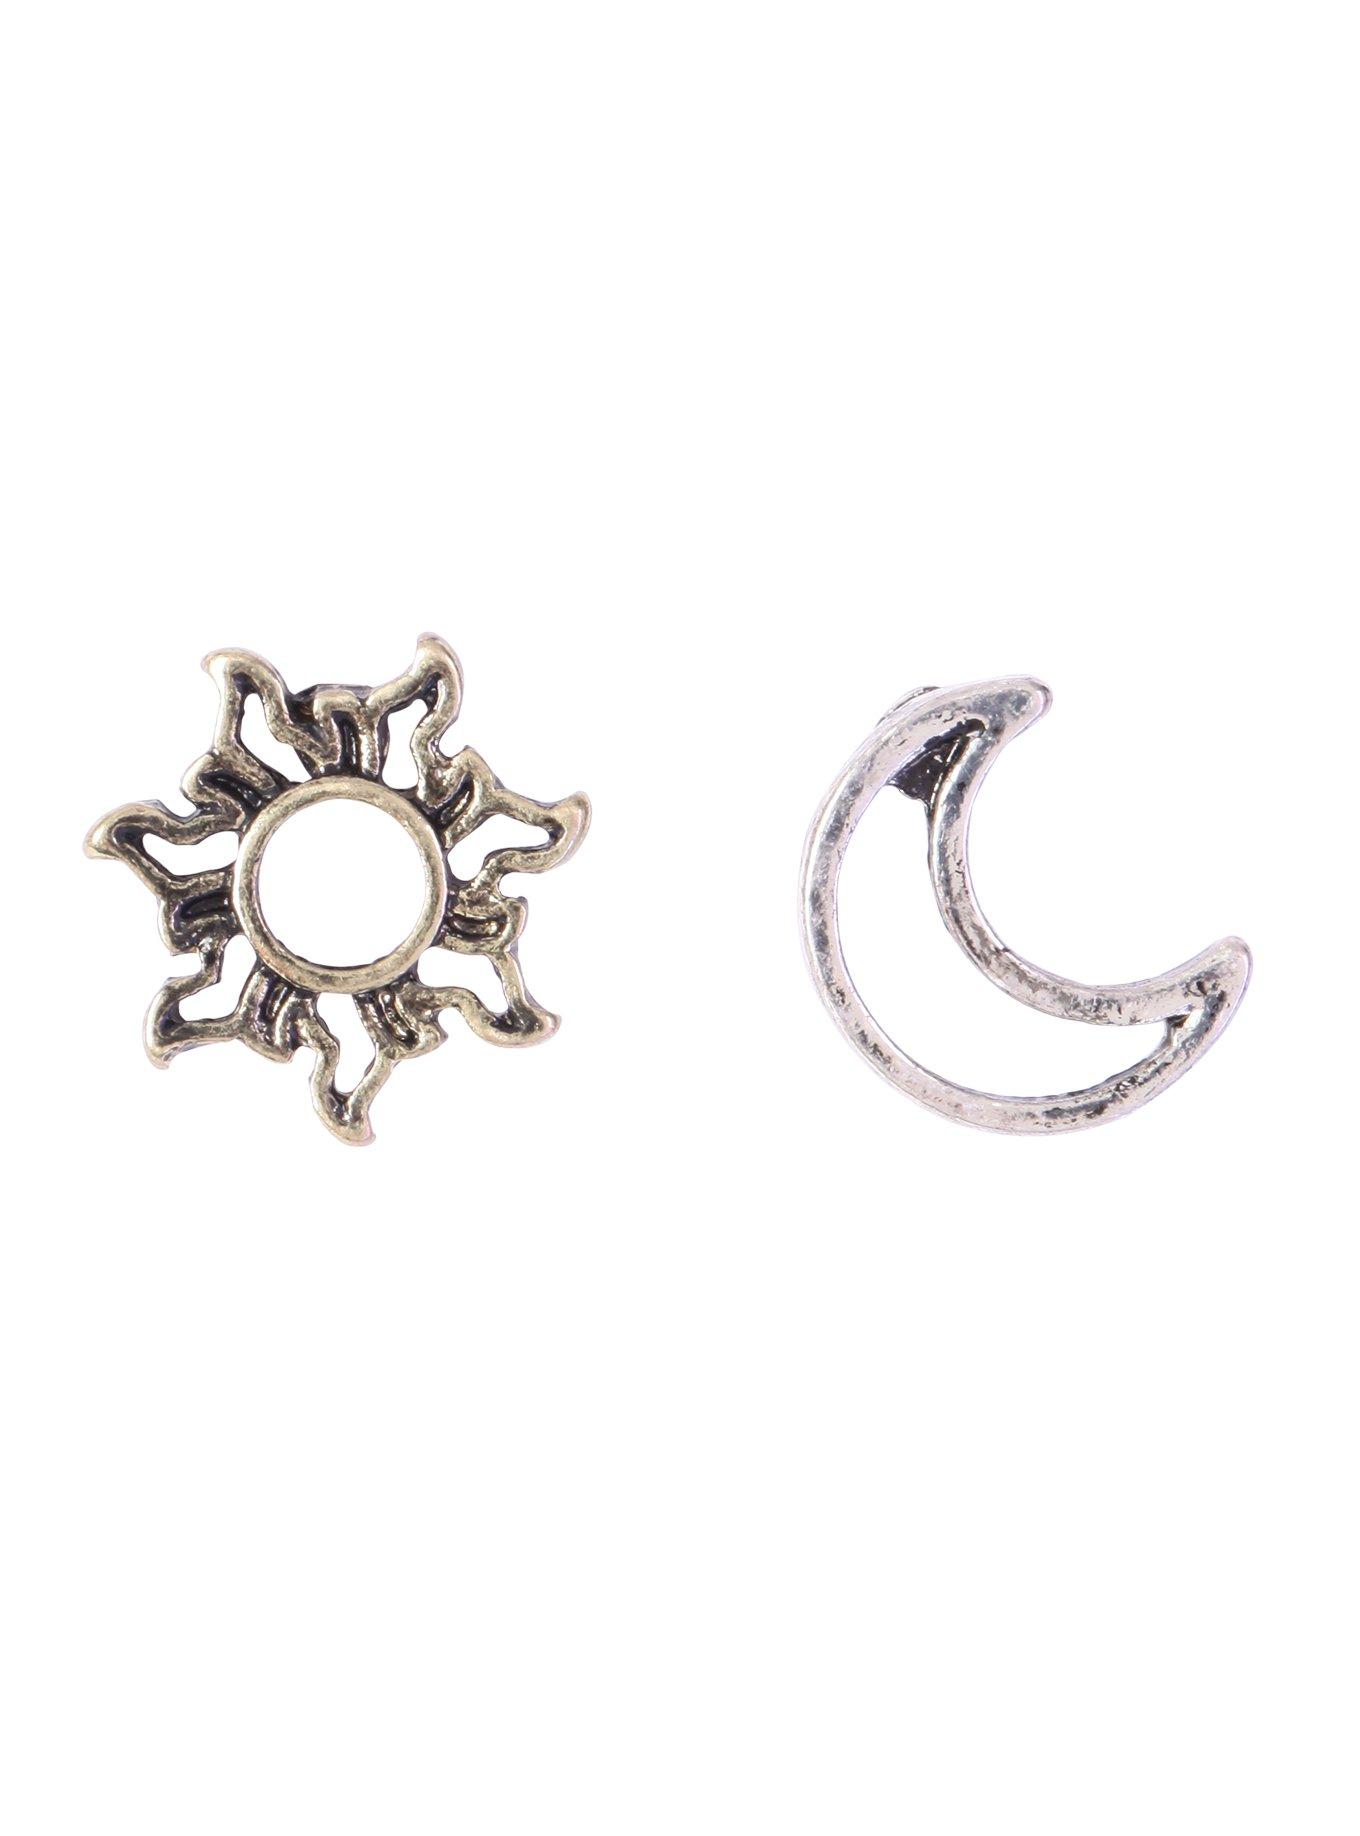 LOVEsick Moon & Sun Stud Earrings, , hi-res